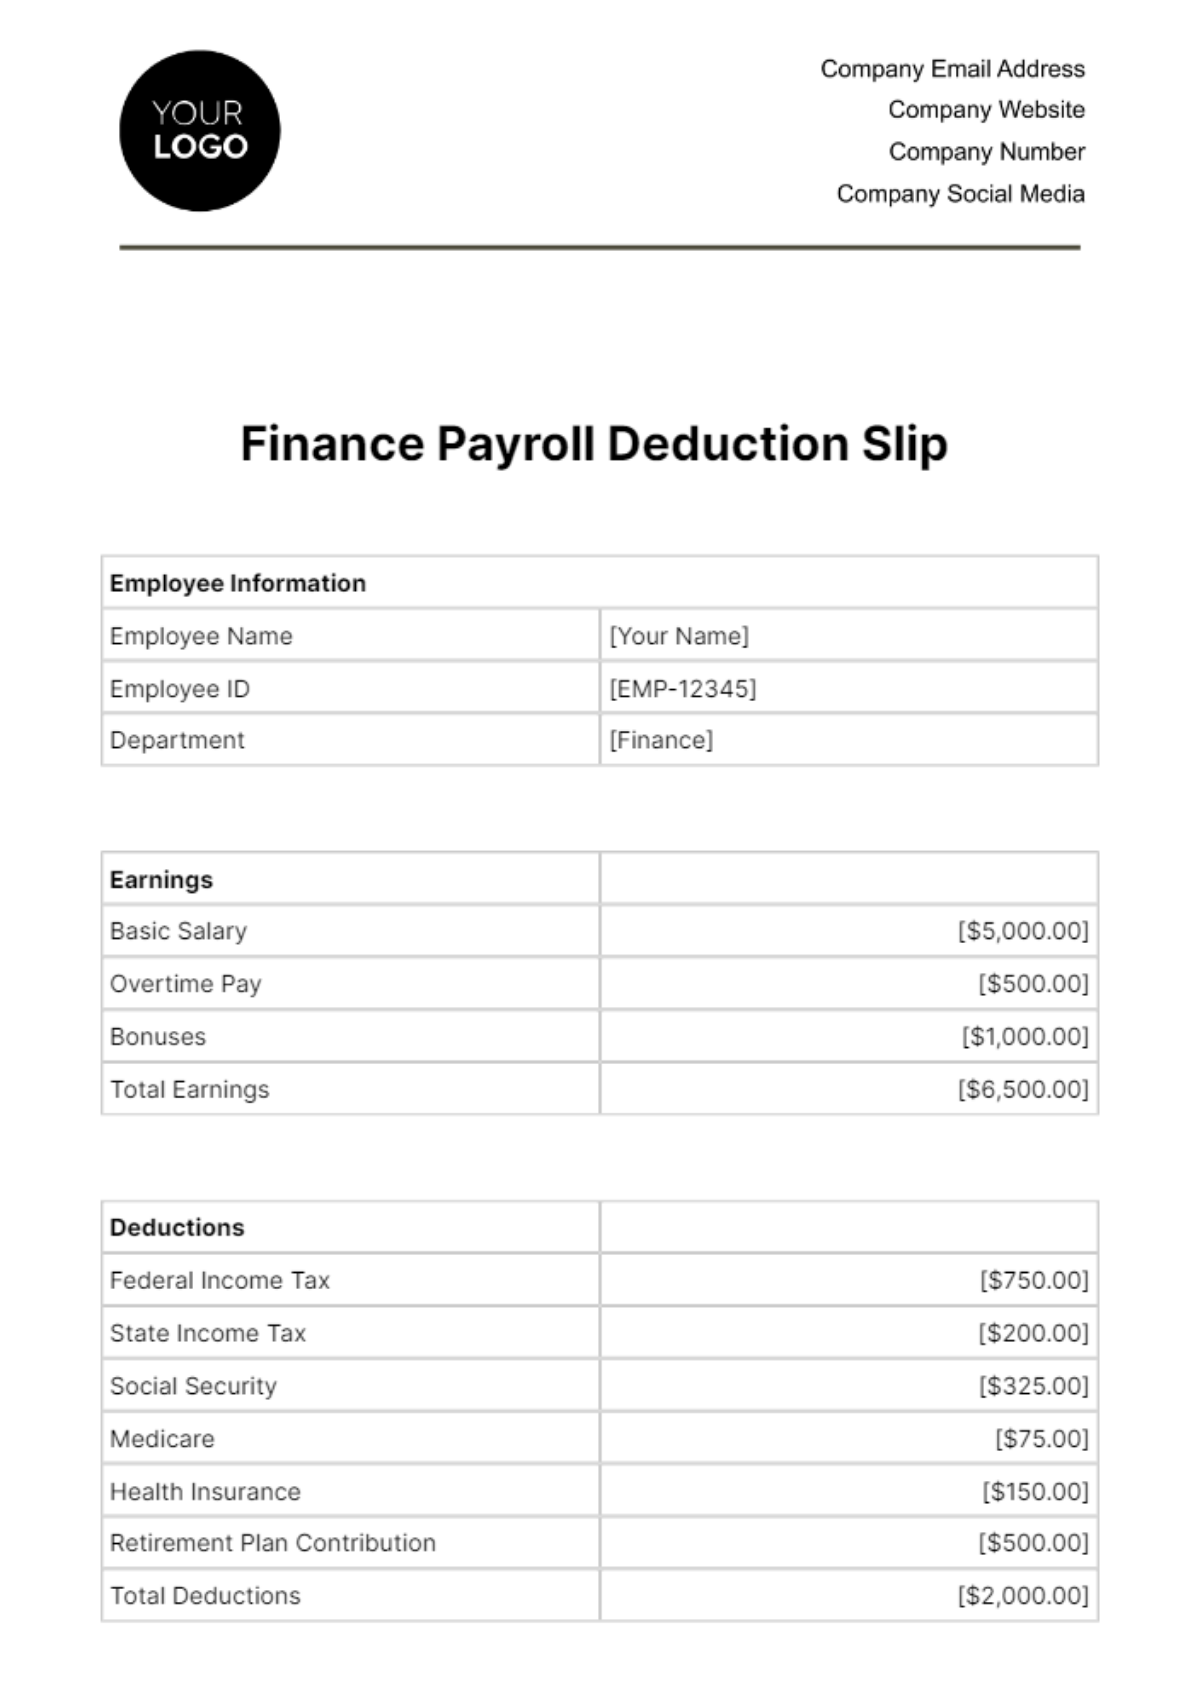 Finance Payroll Deduction Slip Template